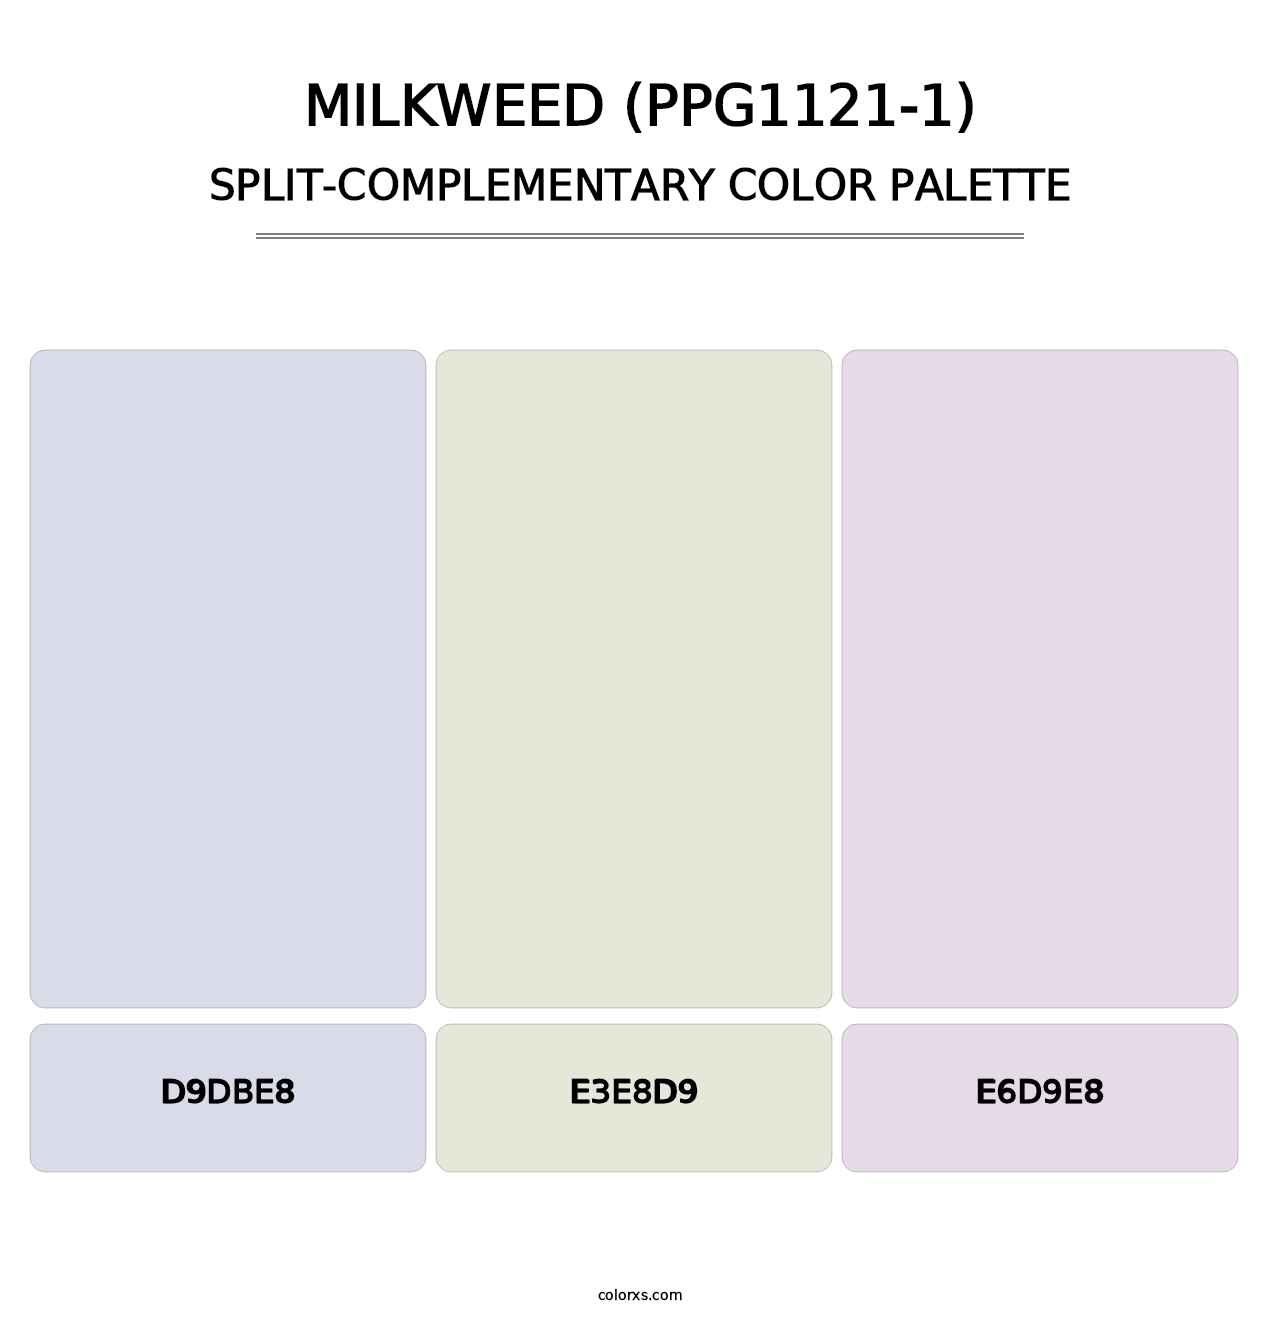 Milkweed (PPG1121-1) - Split-Complementary Color Palette